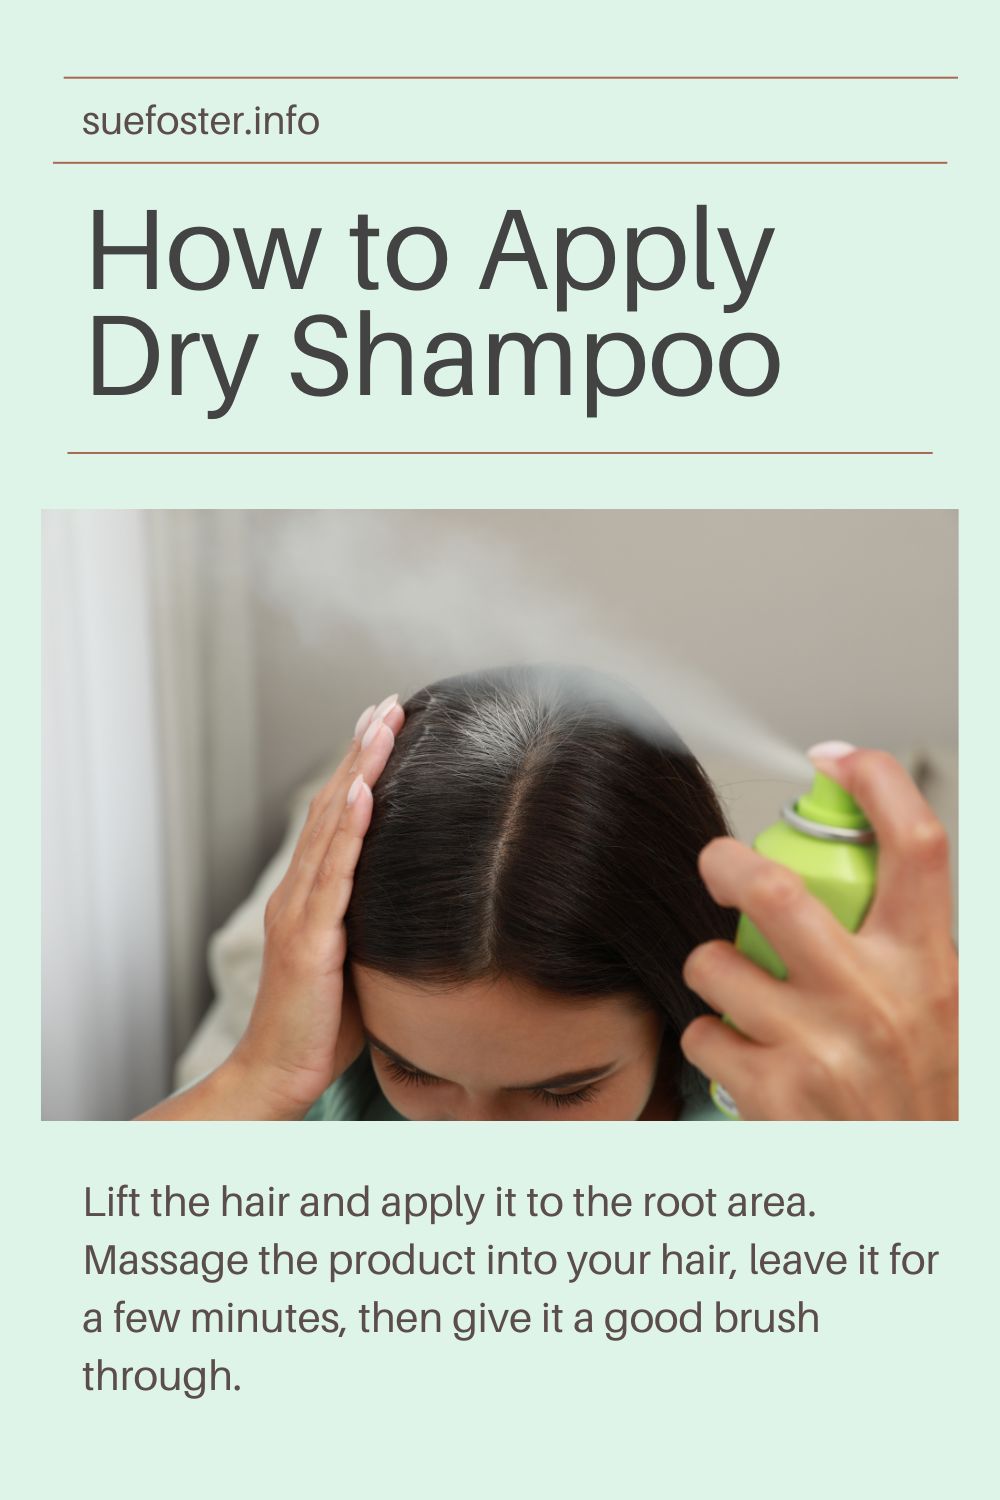 How to apply dry shampoo